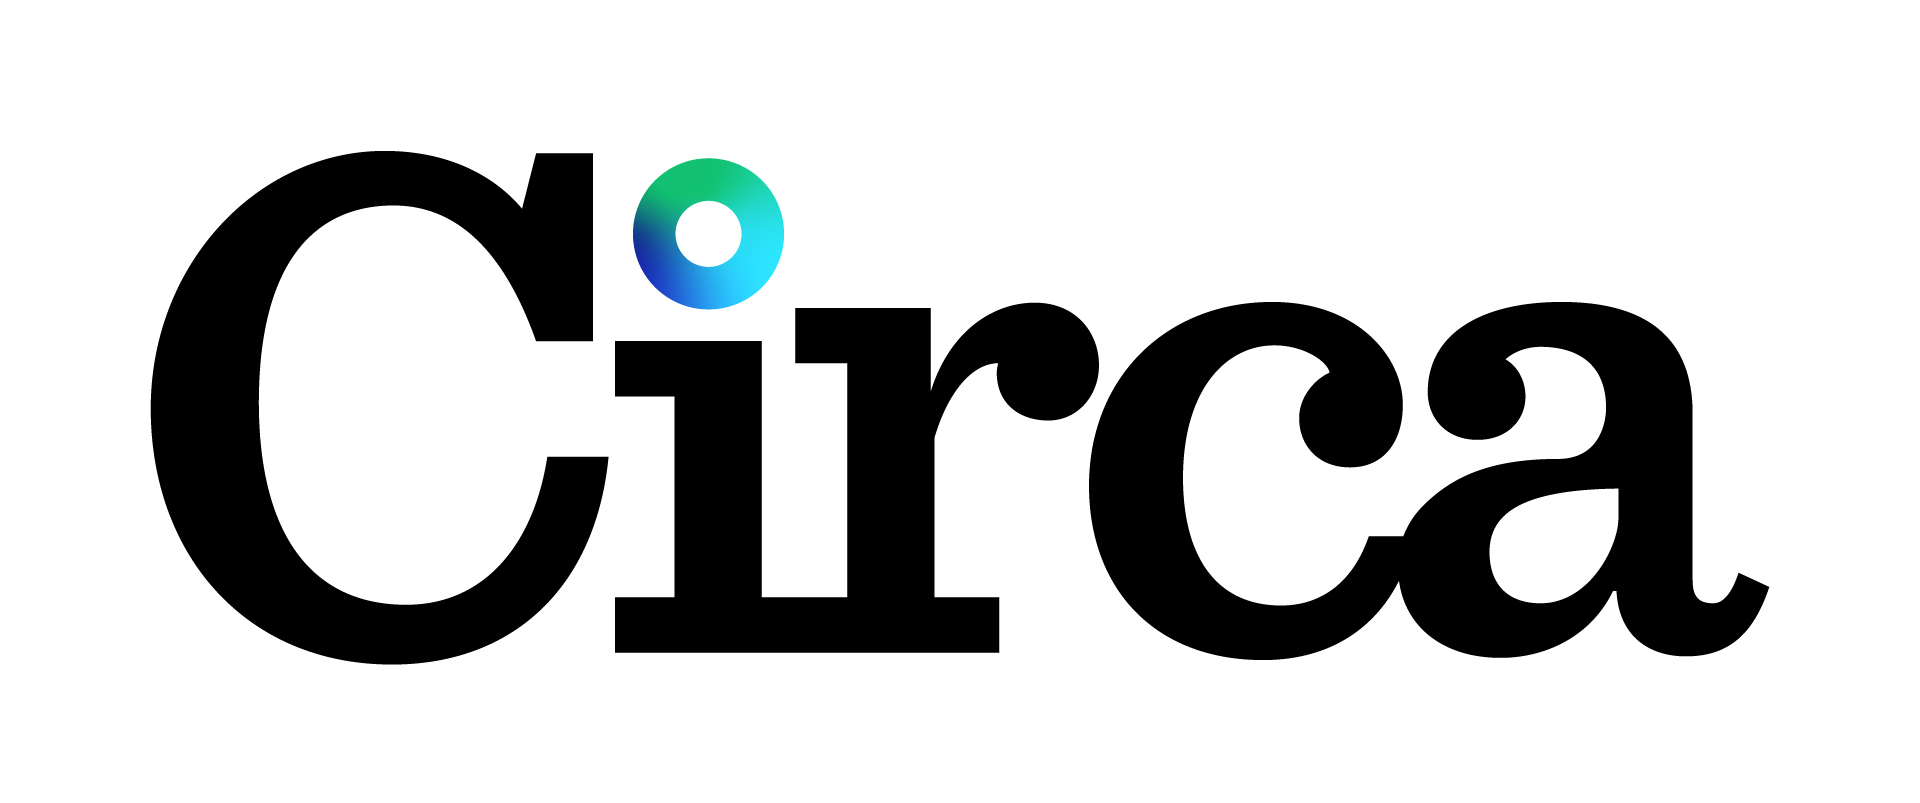 Circa Company Logo